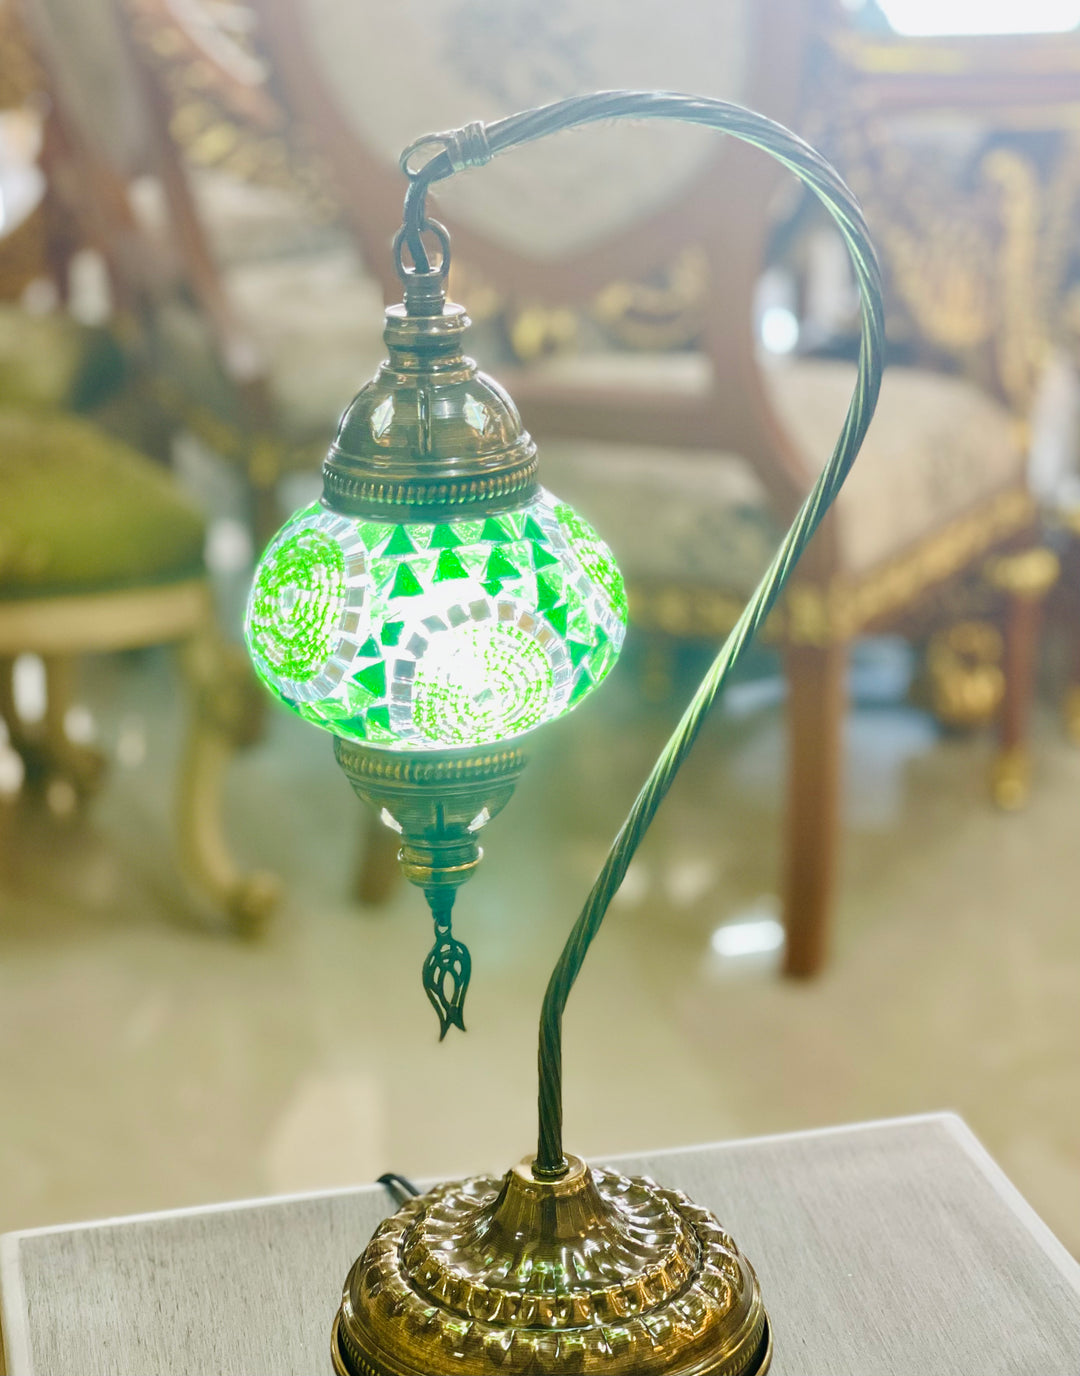 9 Colors | Turkish mosaic Gooseneck table lamp.